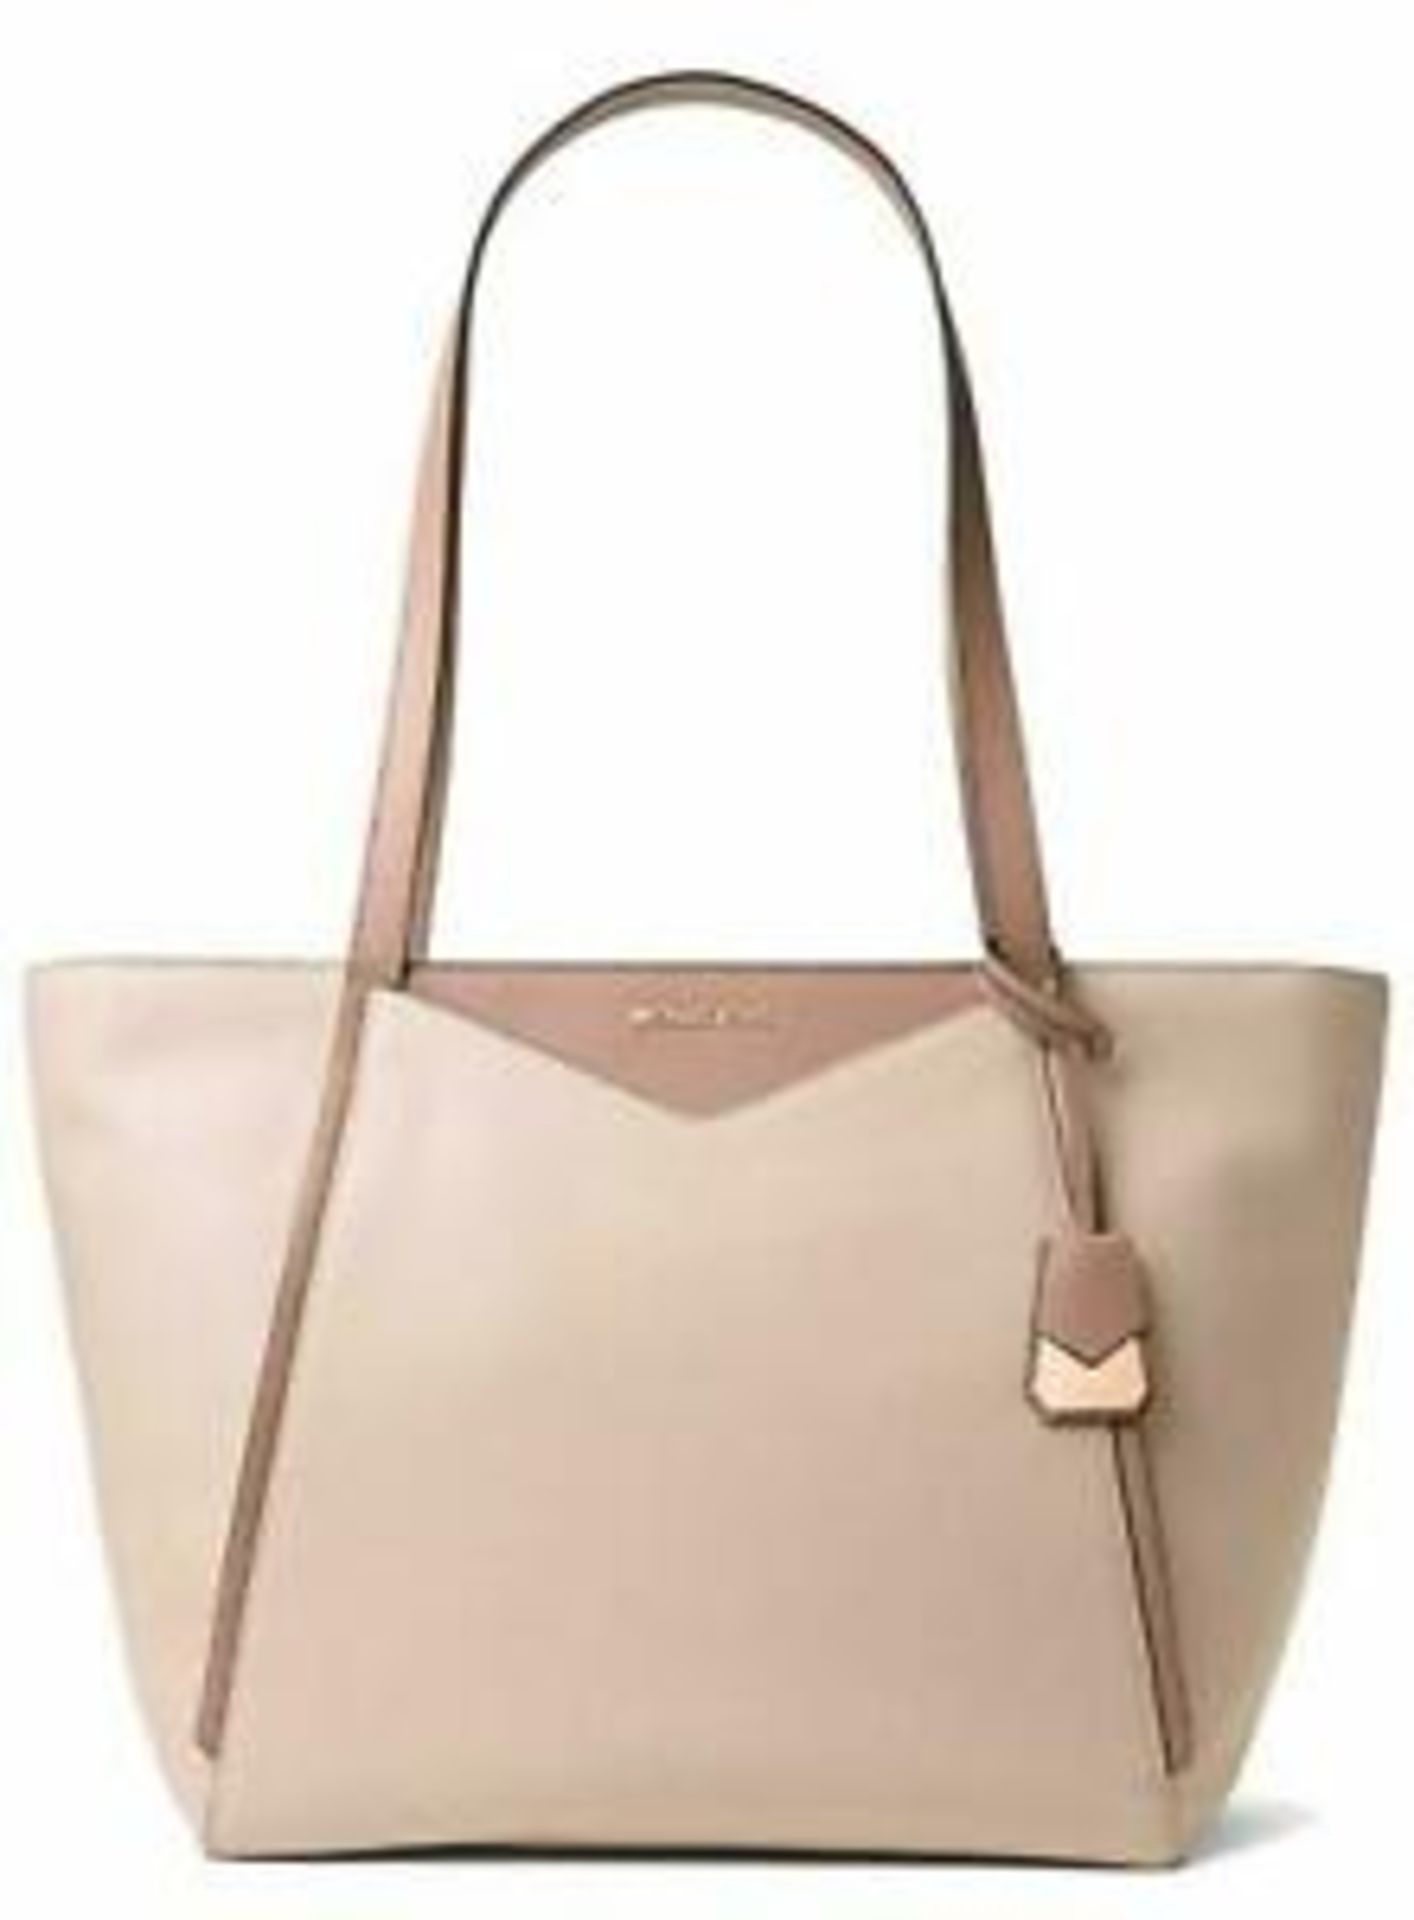 V Brand New Ladies Michael Kors Whitney Soft Pink/Fawn Tote Bag (RRP £270 Michael Kors)